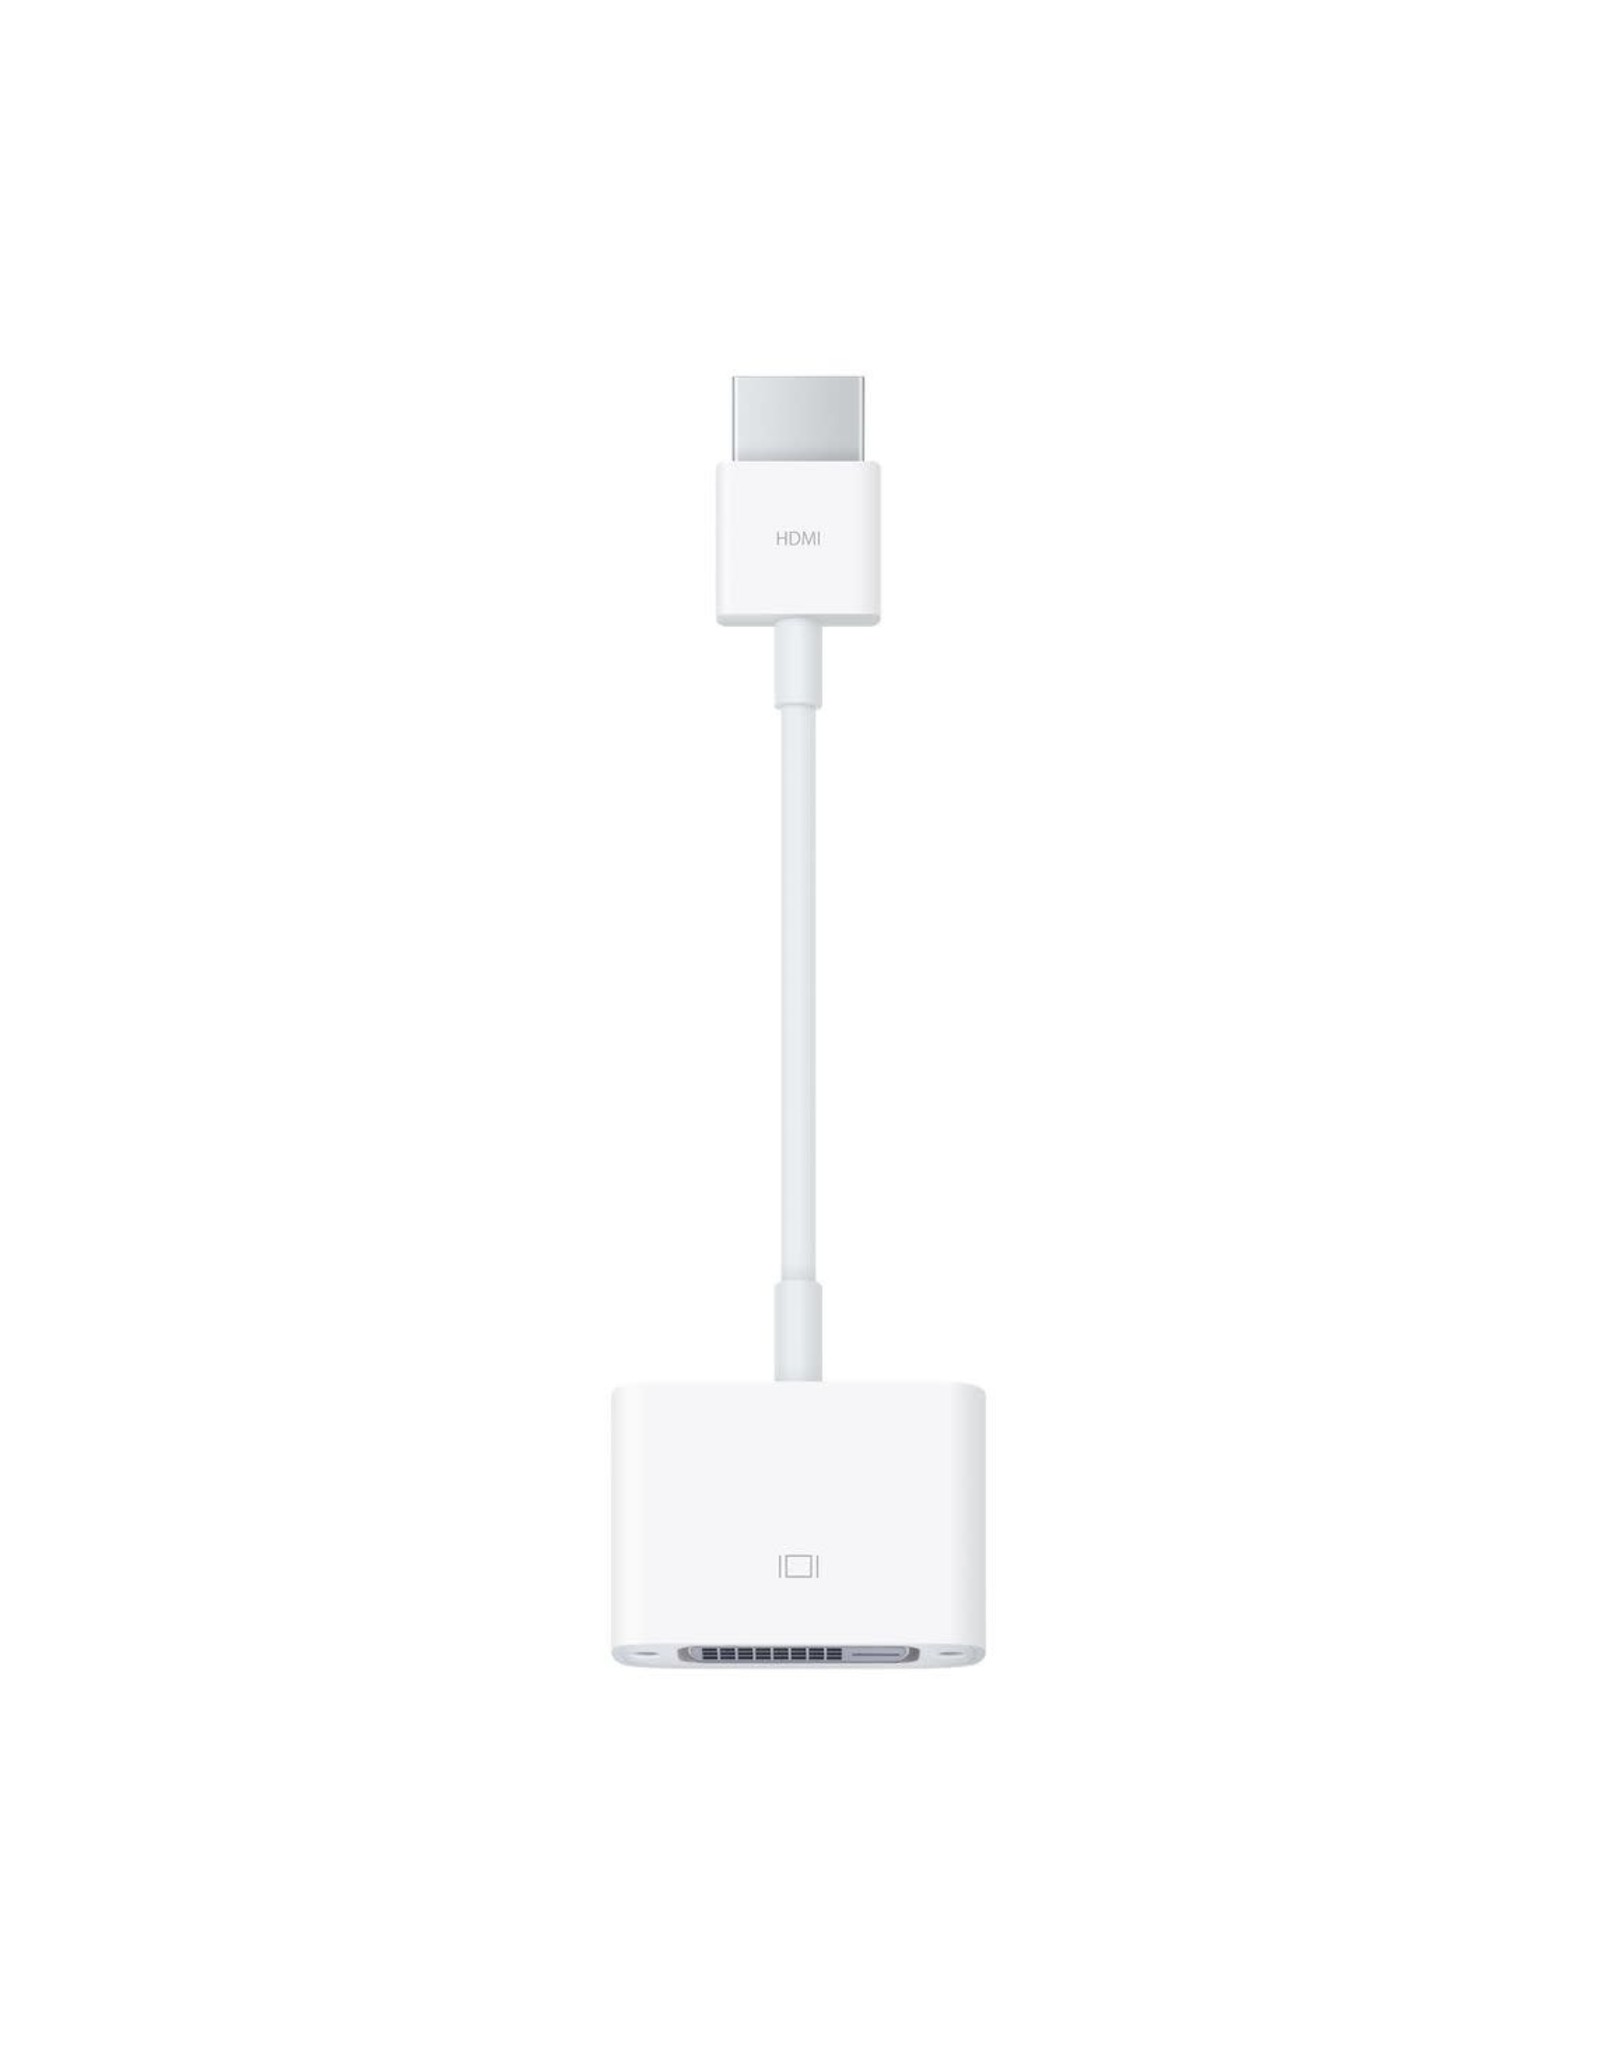 Apple Apple HDMI to DVI Adapter